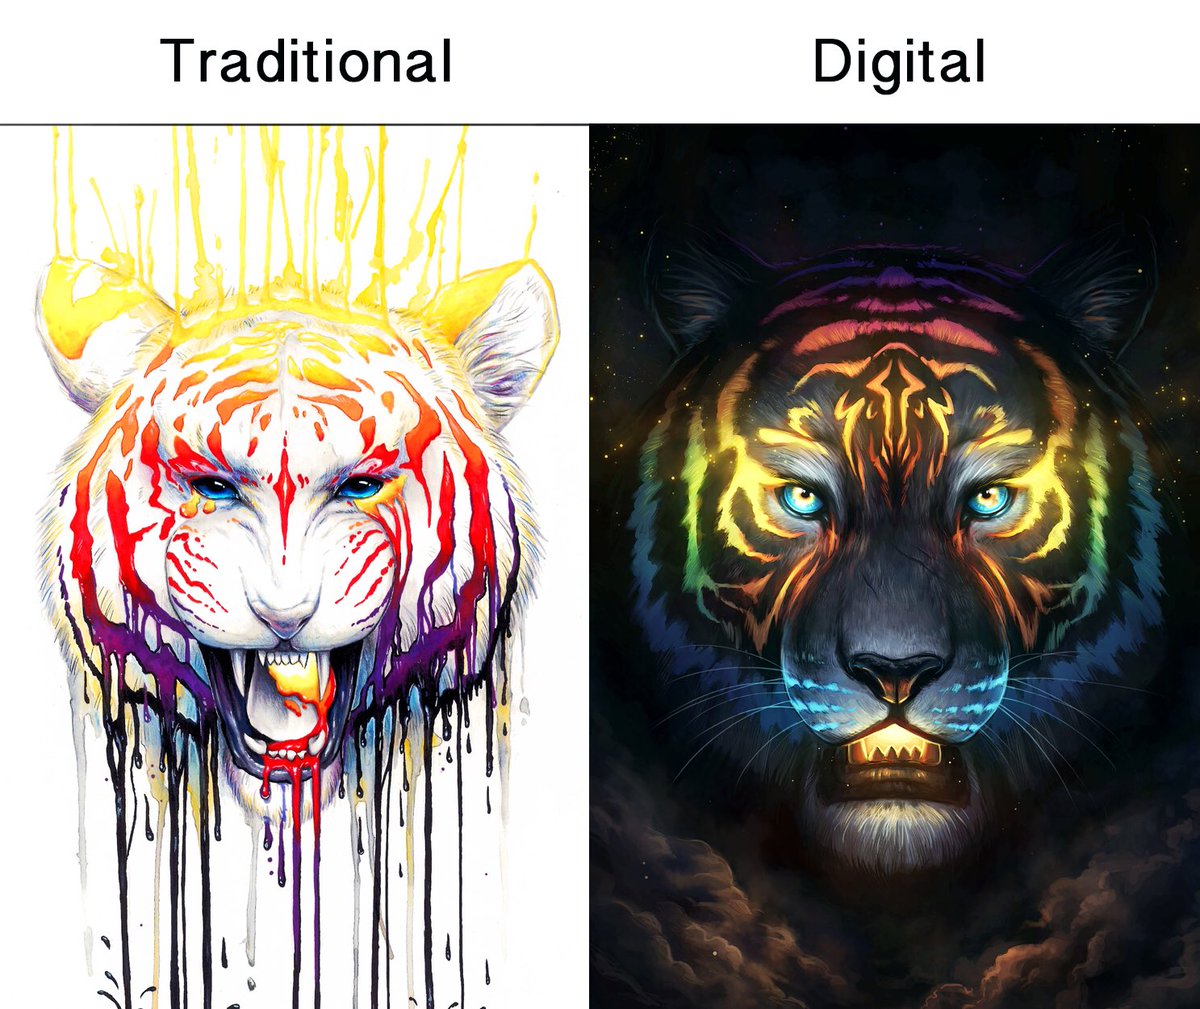 Digital Art Vs Traditional Art Reddit - img-omnom